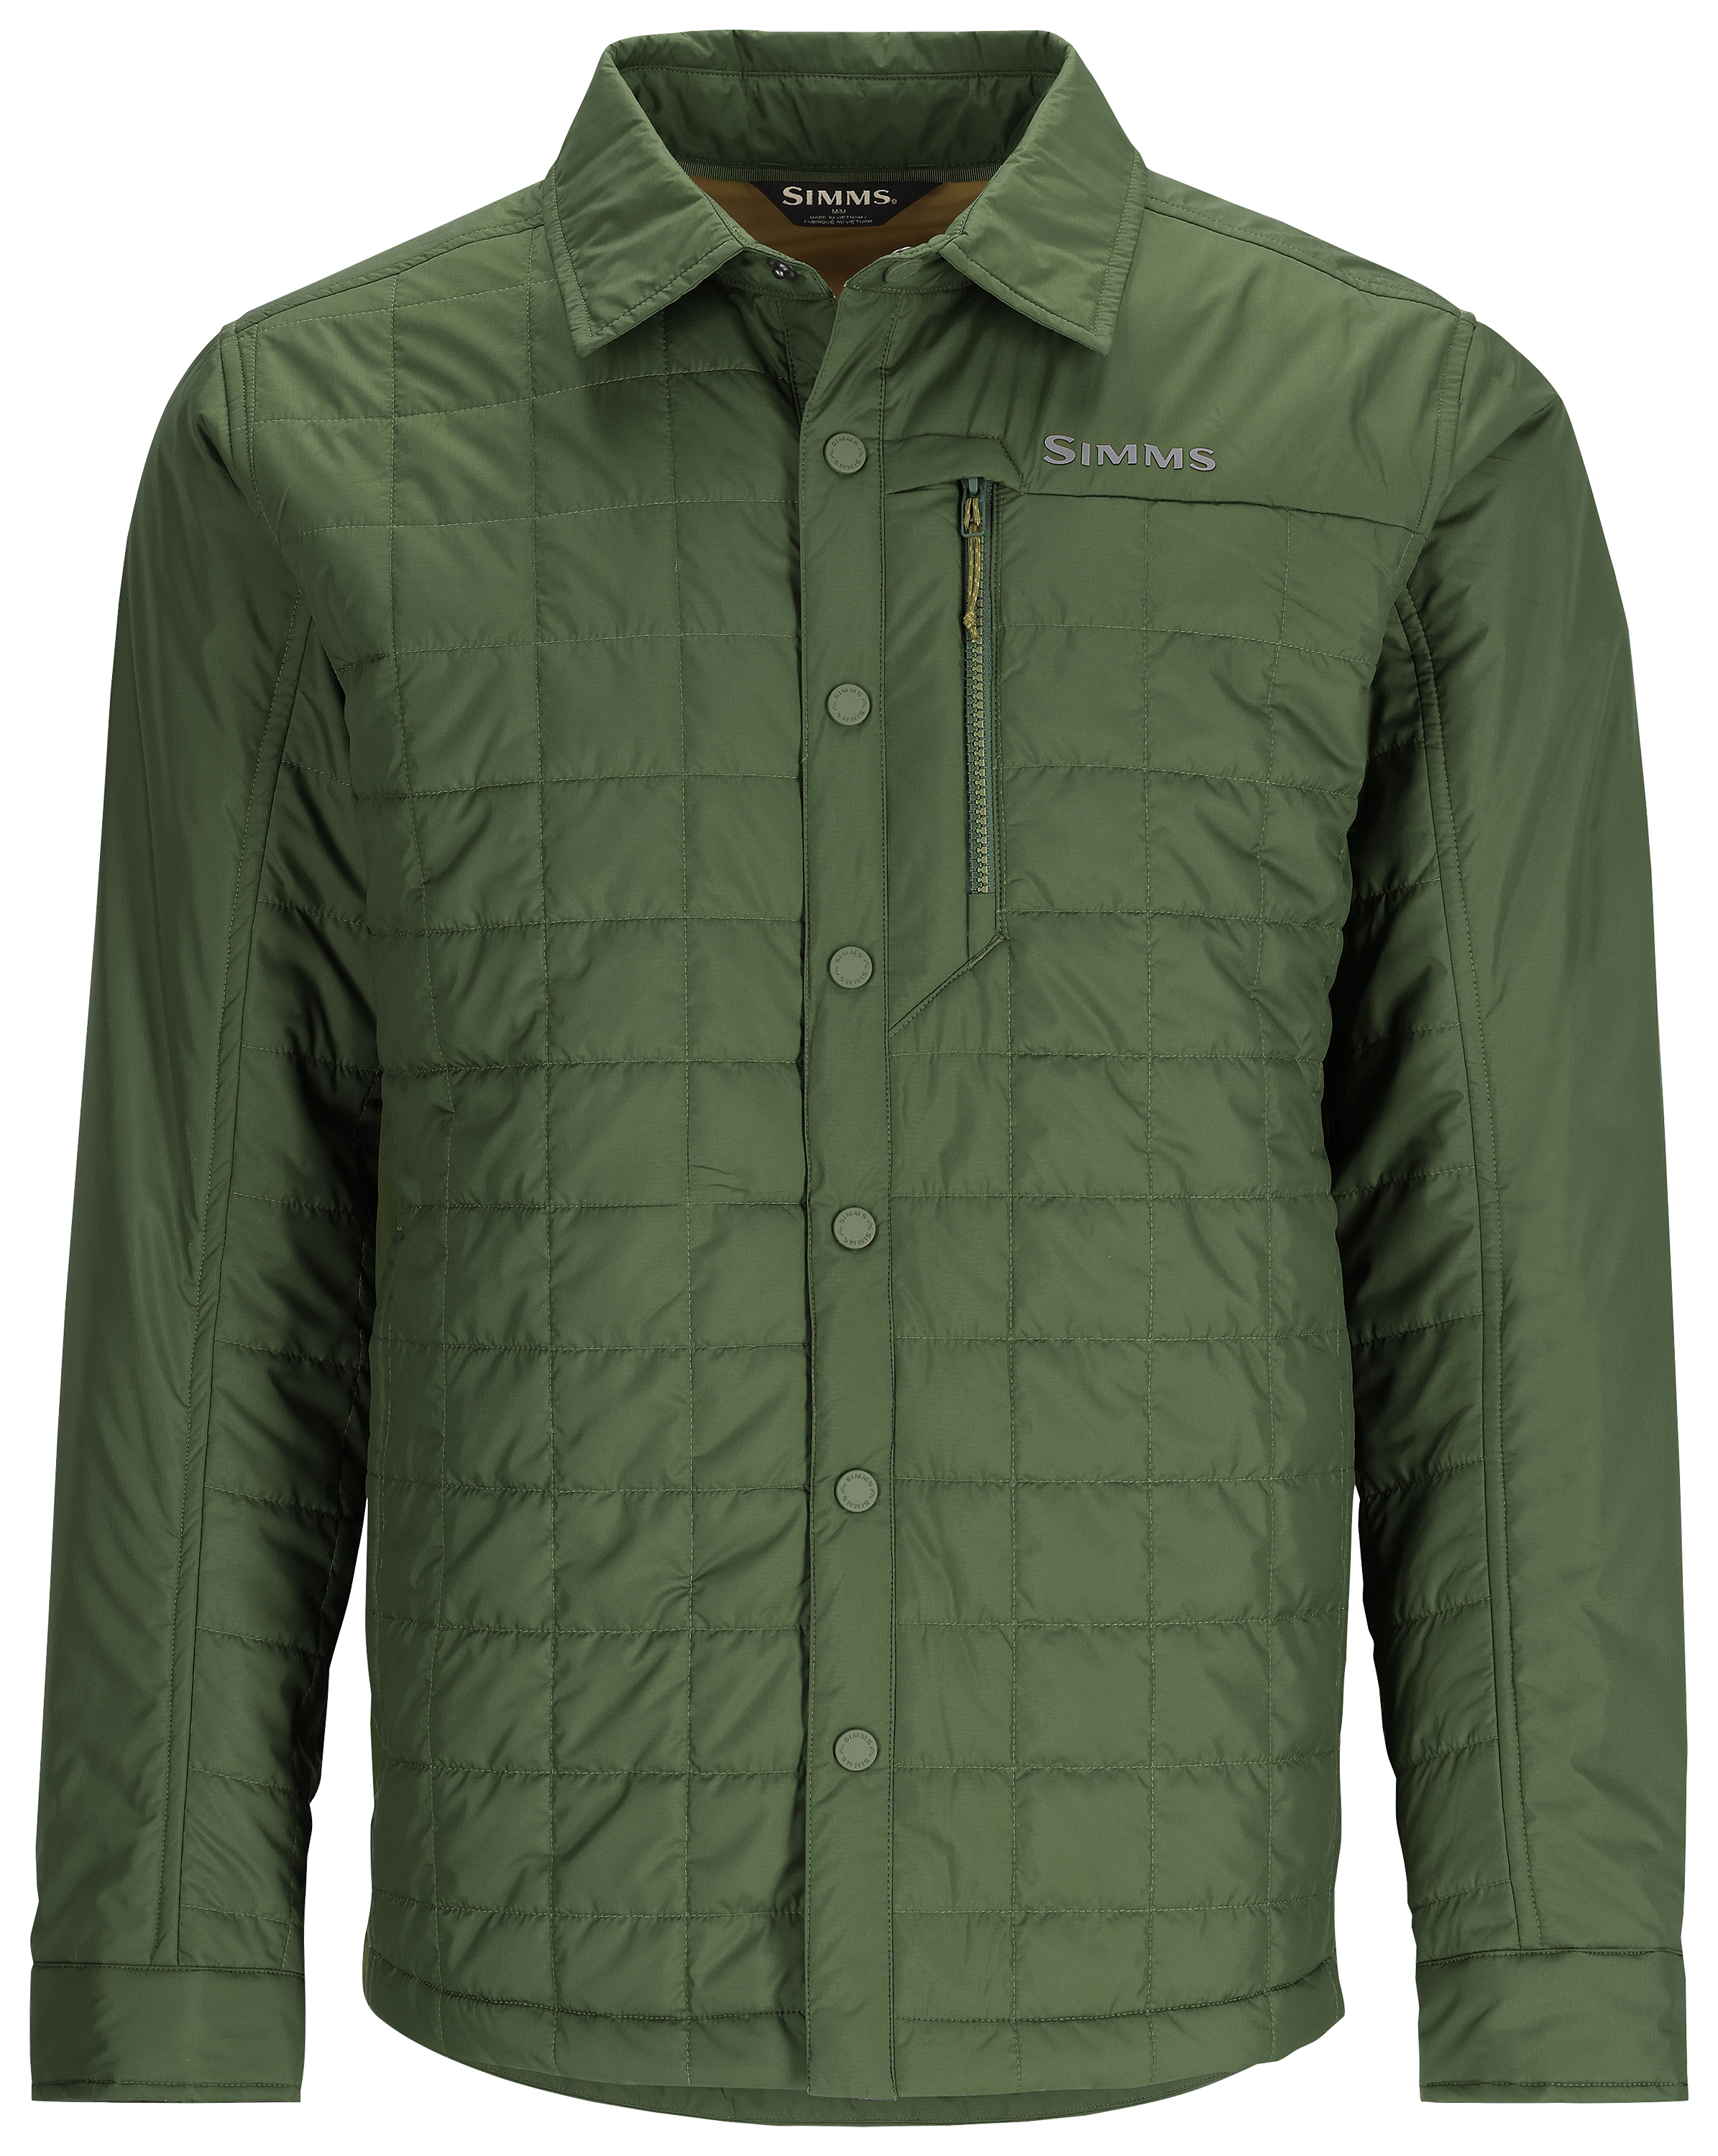 Simms Rivershed Full-Zip Fleece Long-Sleeve Jacket for Men